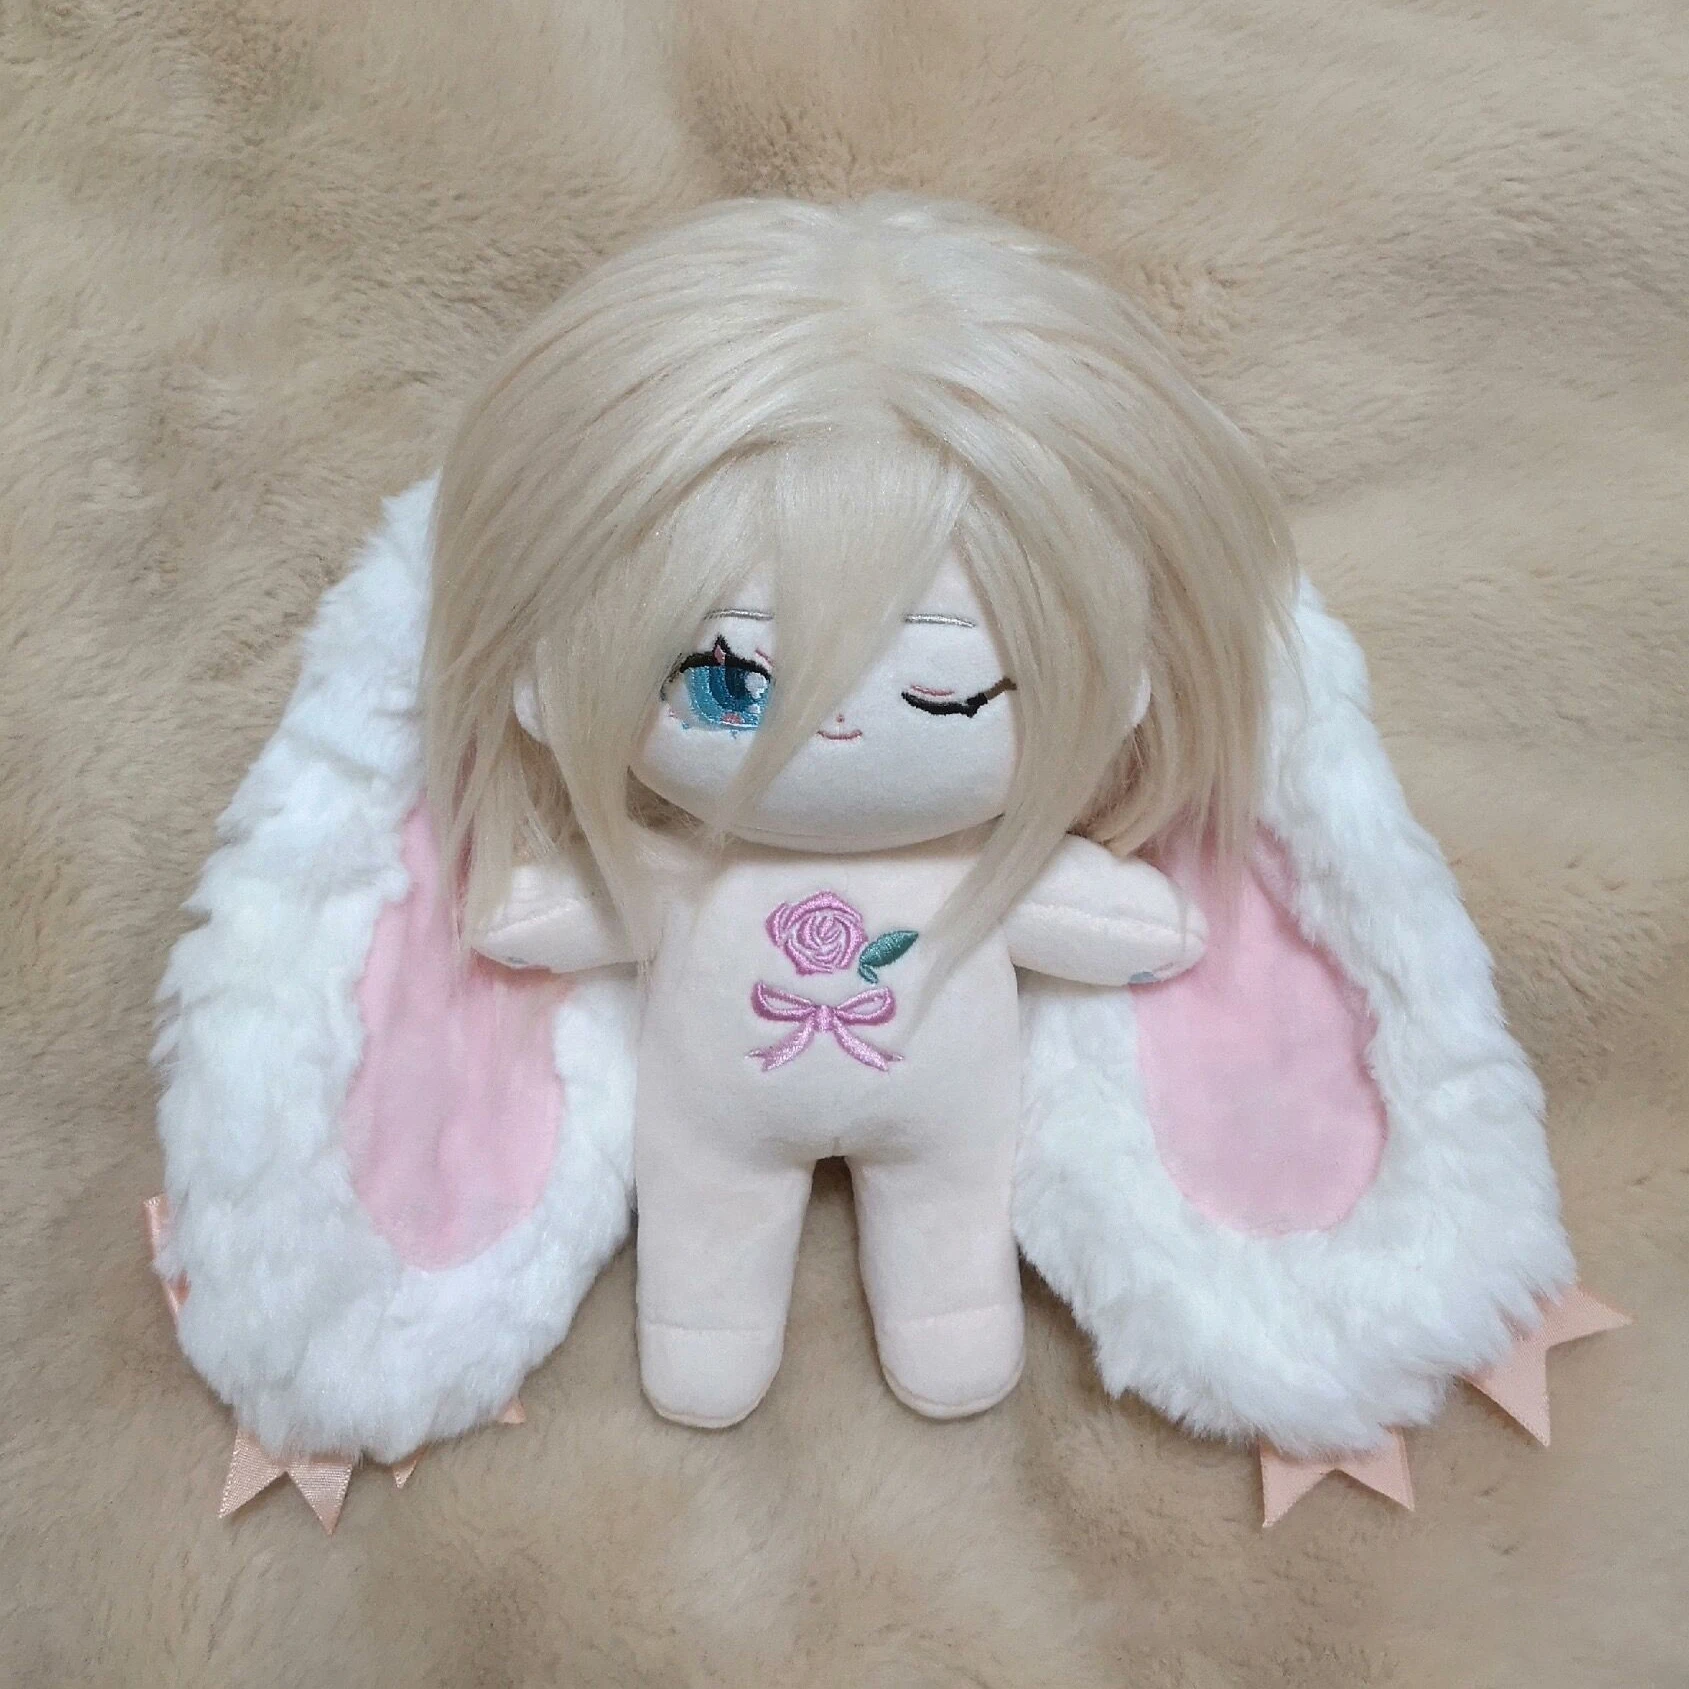 Ensemble Stars あんさんぶるスターズ! Tenshouin Eichi Anime Game Cosplay Cute Animal Ear Plushie Dolls Body Stuffed Doll Toy Gift 20cm